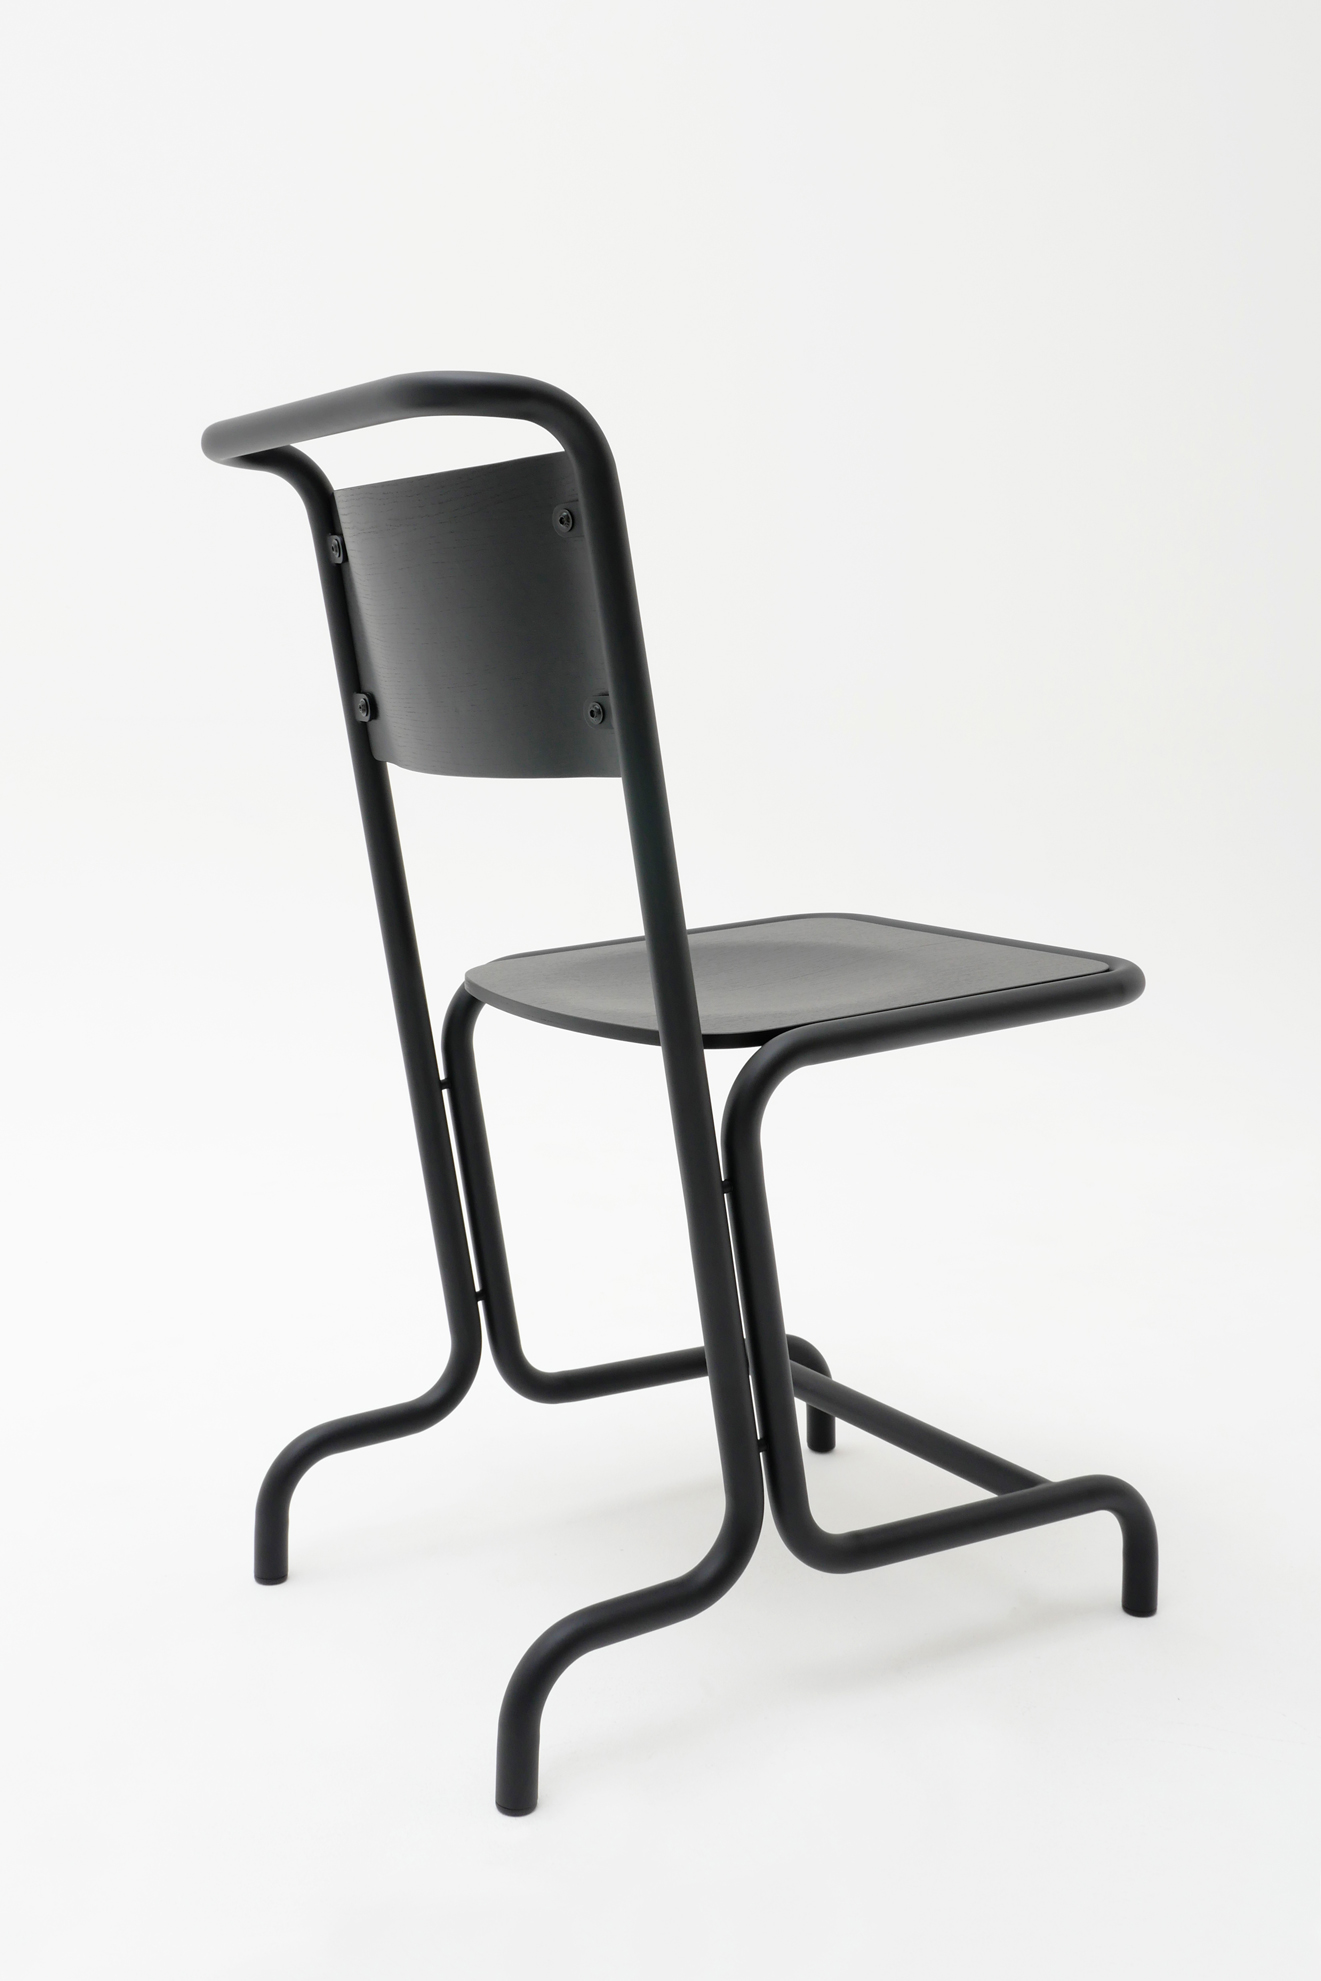 László stool by Andrew Weißert, is a iron stool